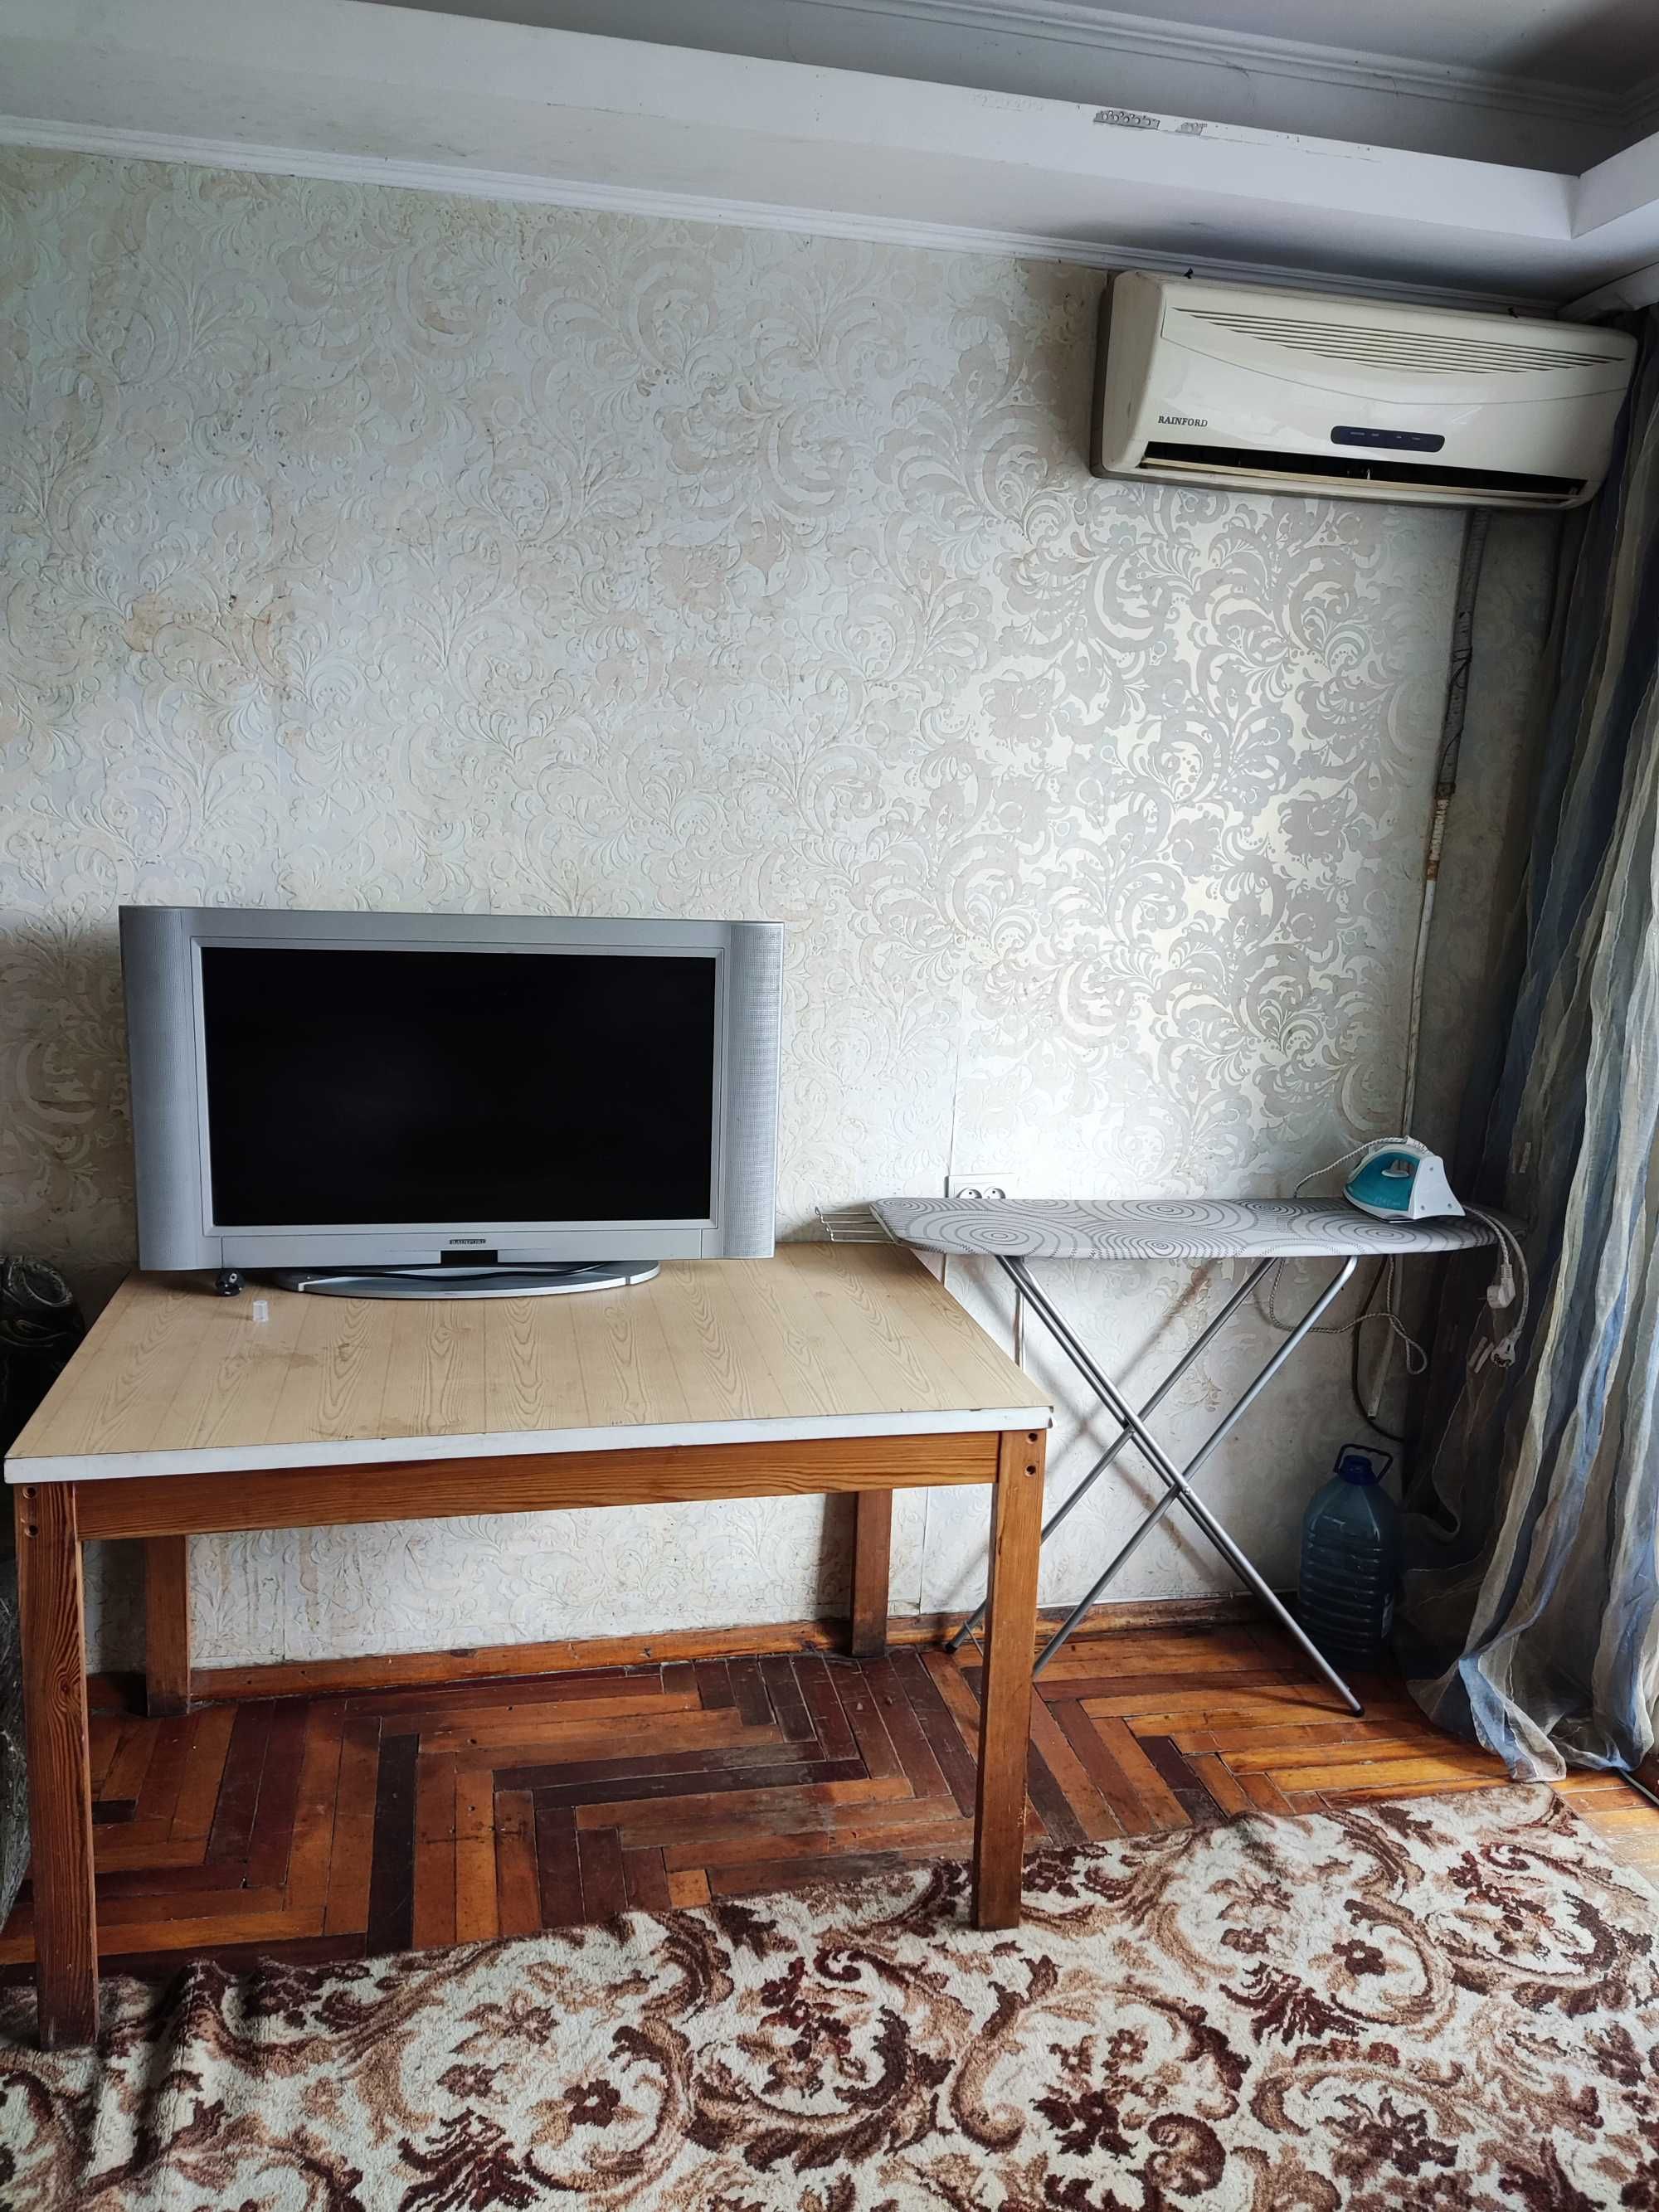 Сдам 1-комнатную квартиру в Александровском районе 5500 грн.